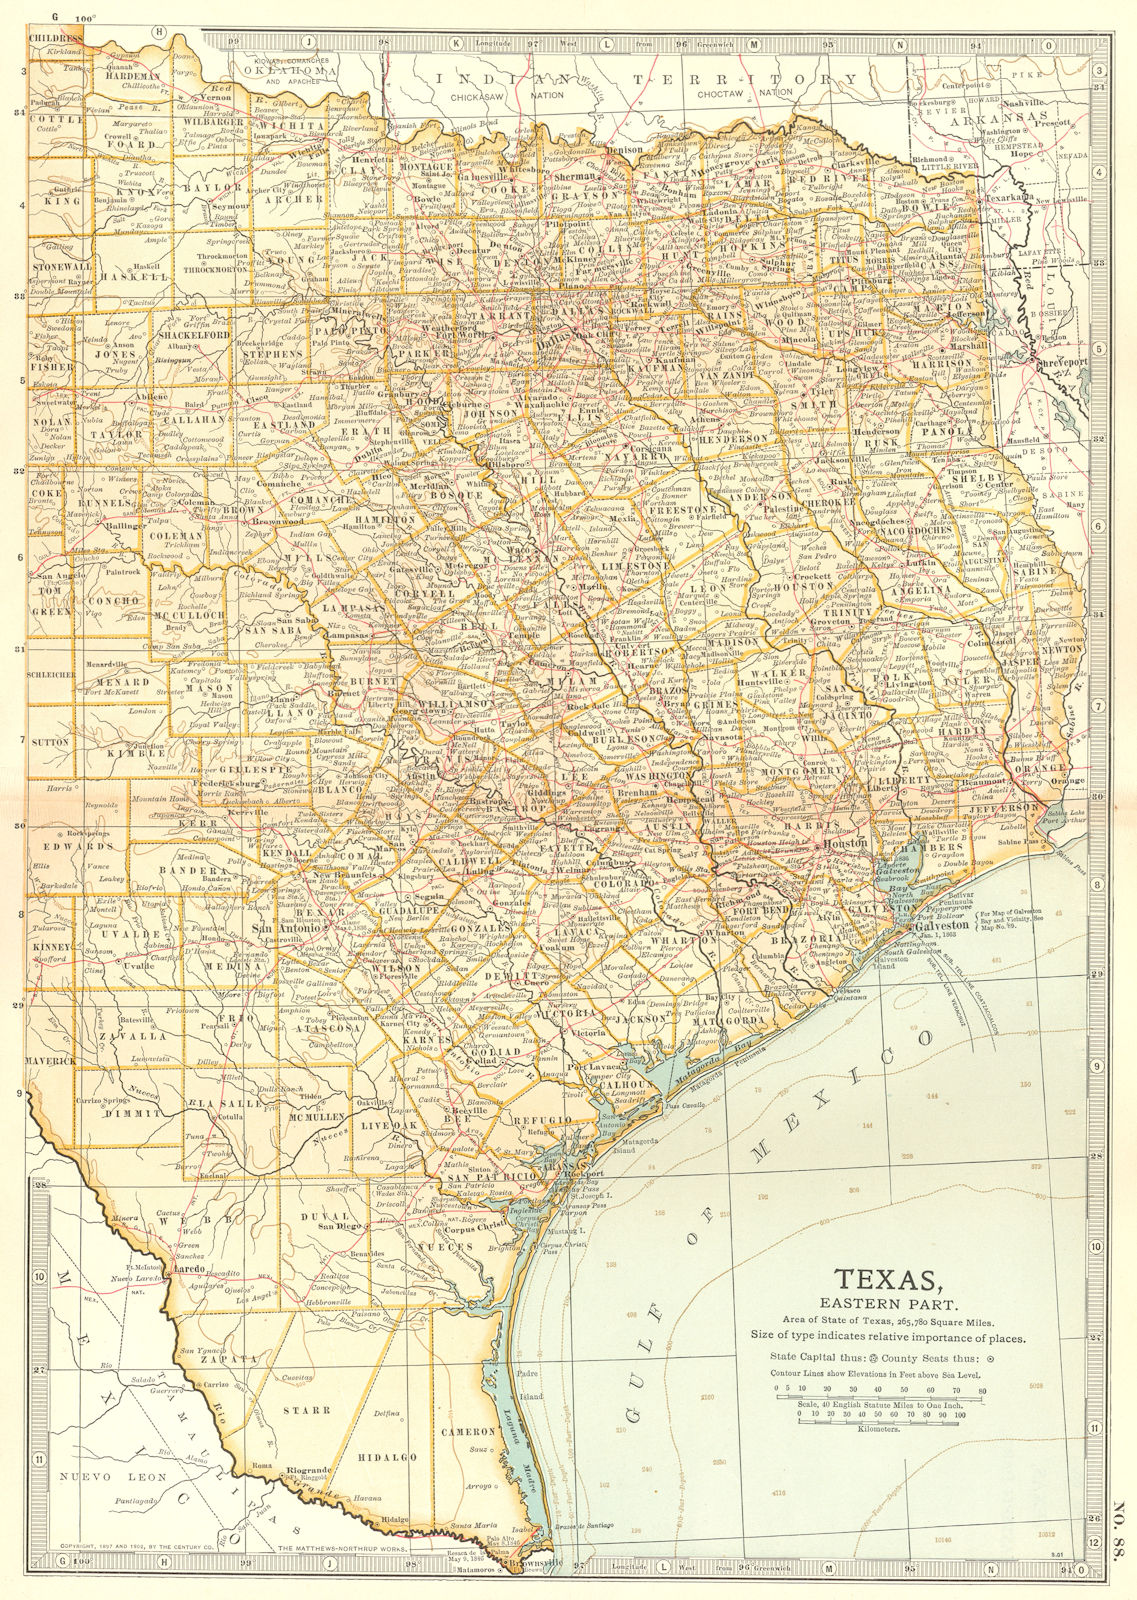 Associate Product TEXAS EAST. State map. Shows Texas revolution battlefields/dates 1835-6 1903